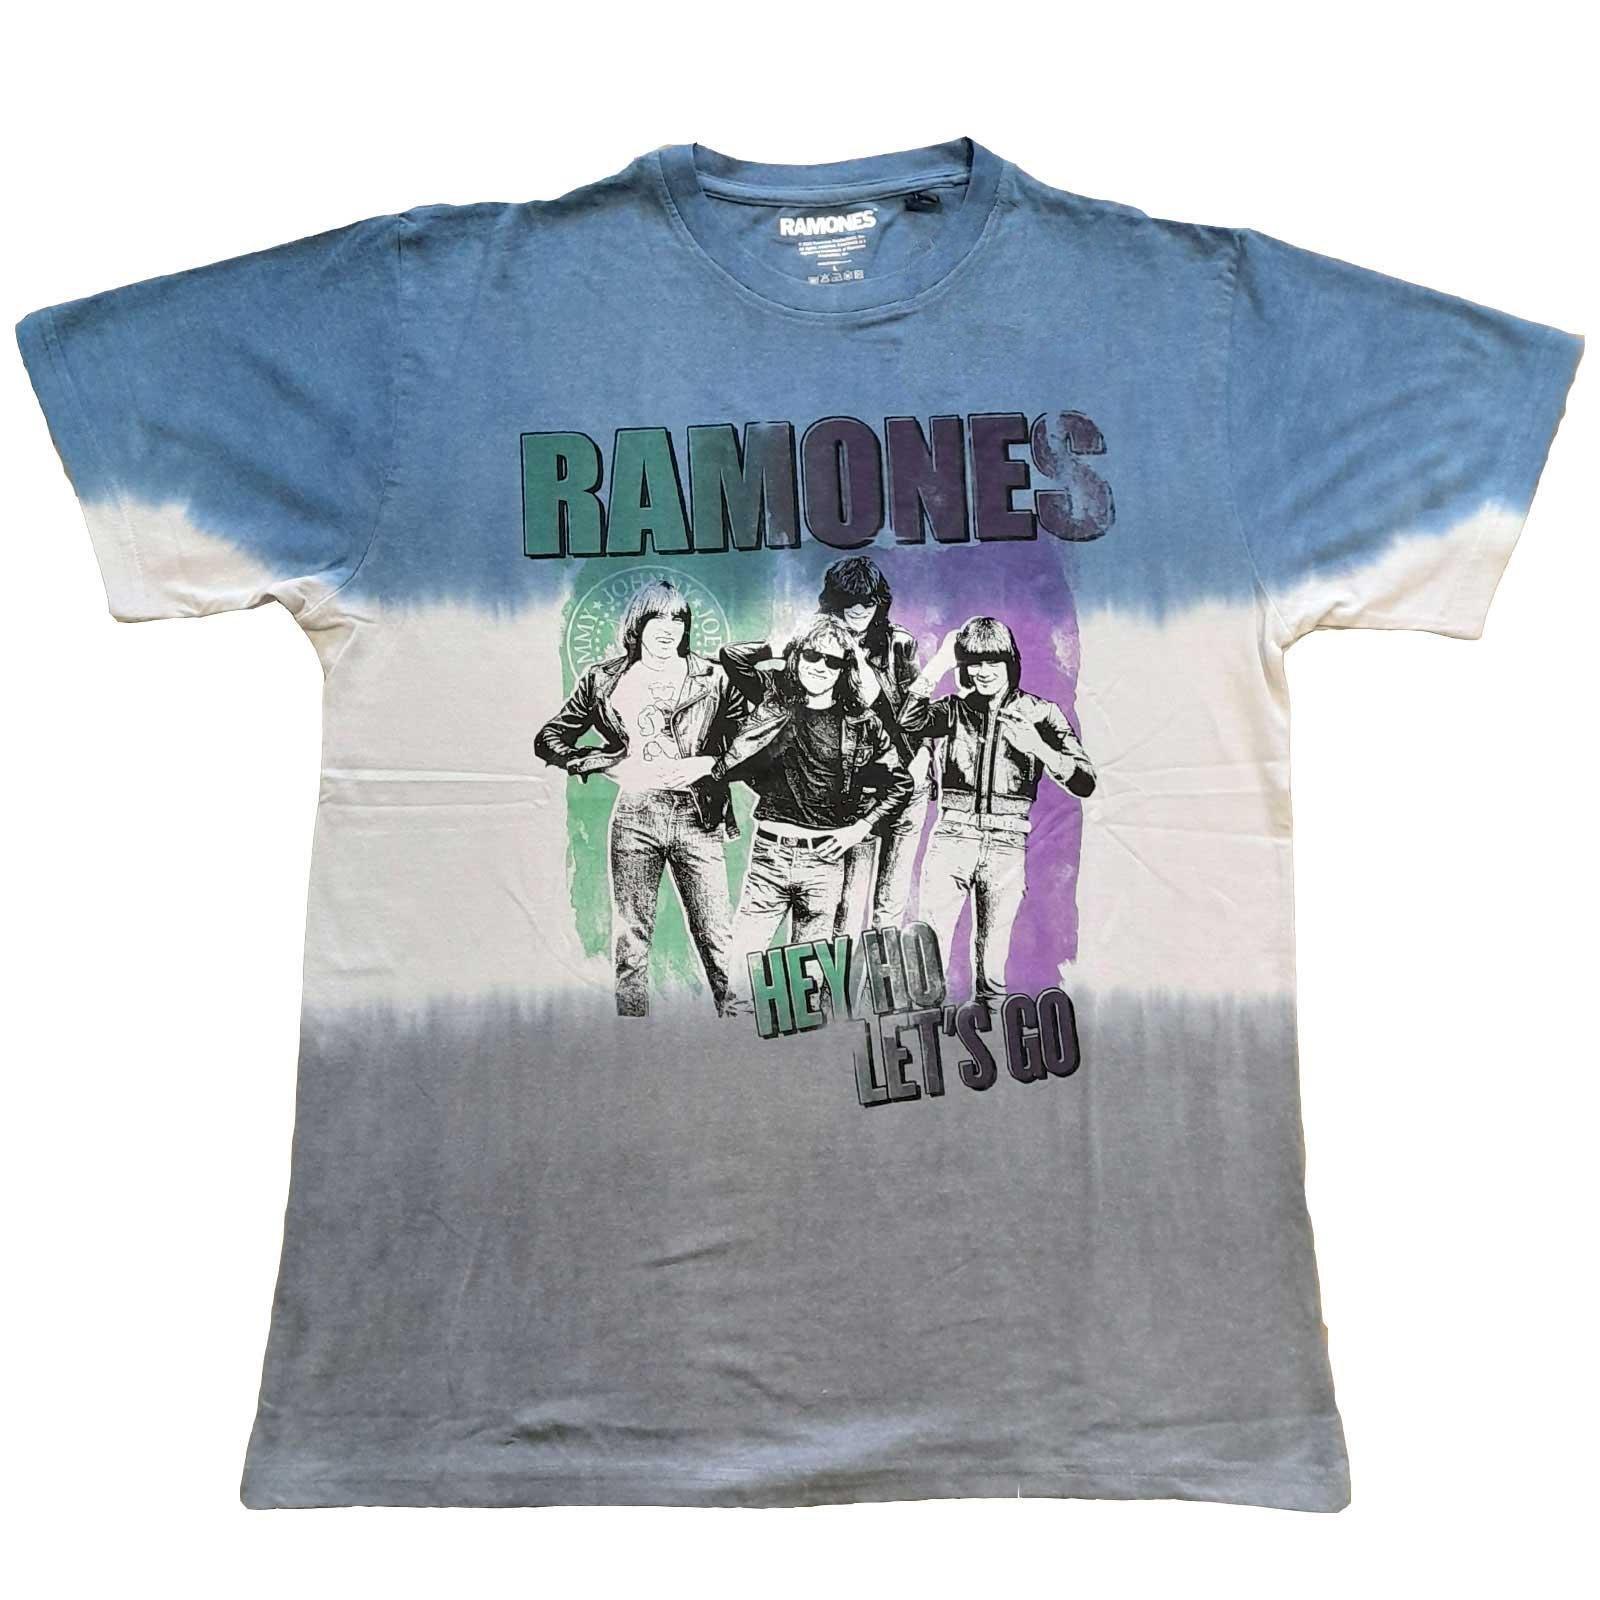 Hey Ho Retro Tshirt Damen Blau XL von Ramones